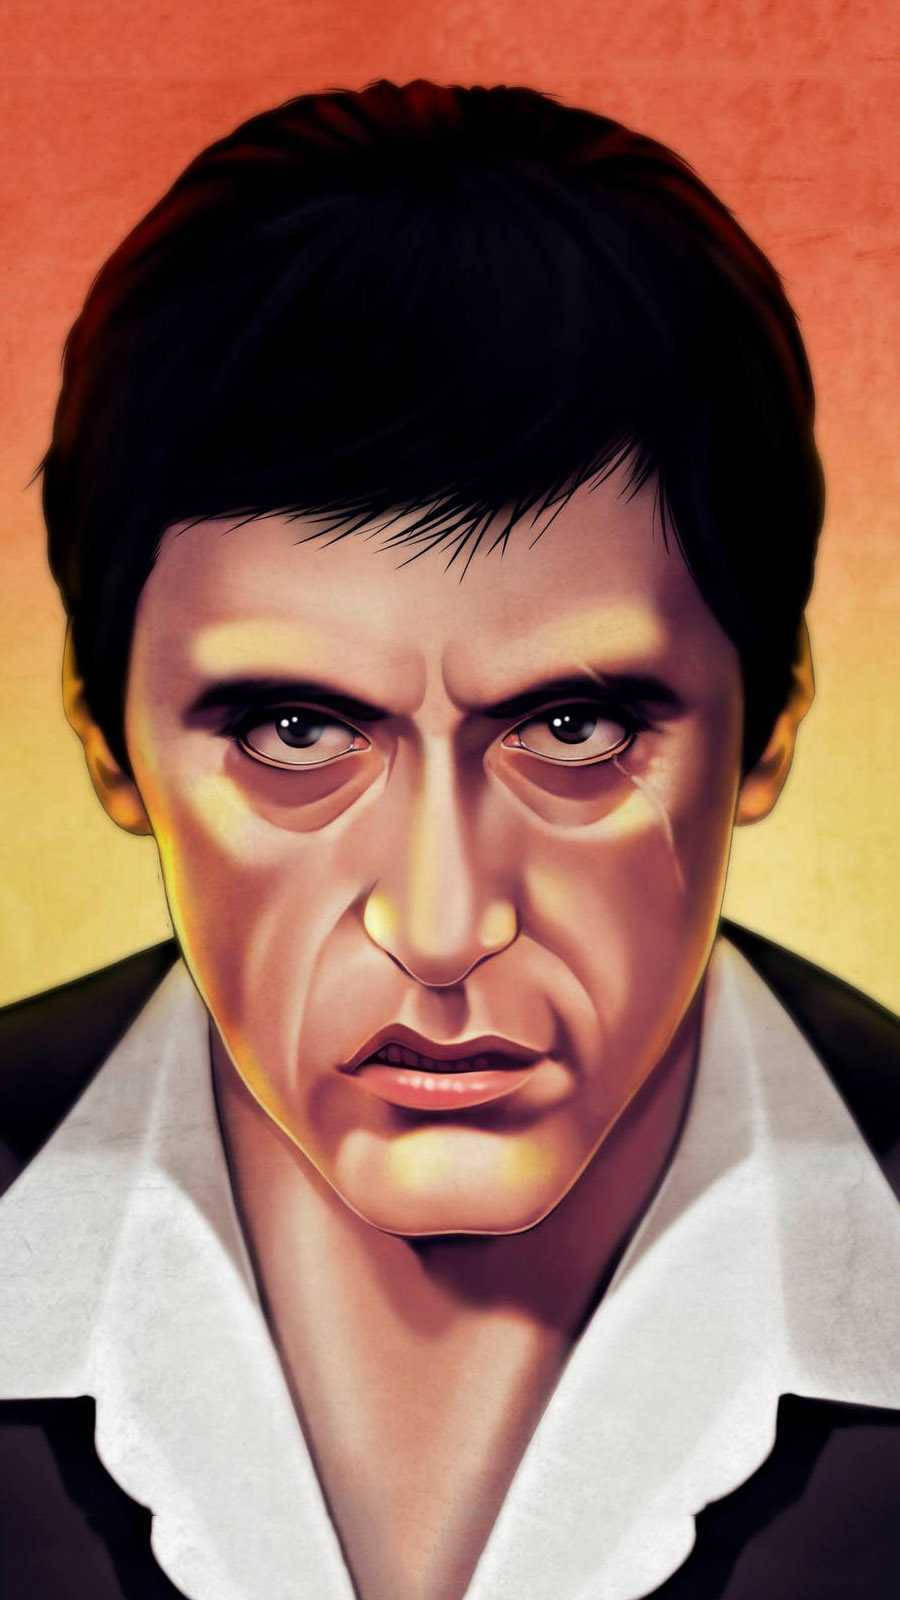 Al Pacino Scarface Portrait Wallpaper